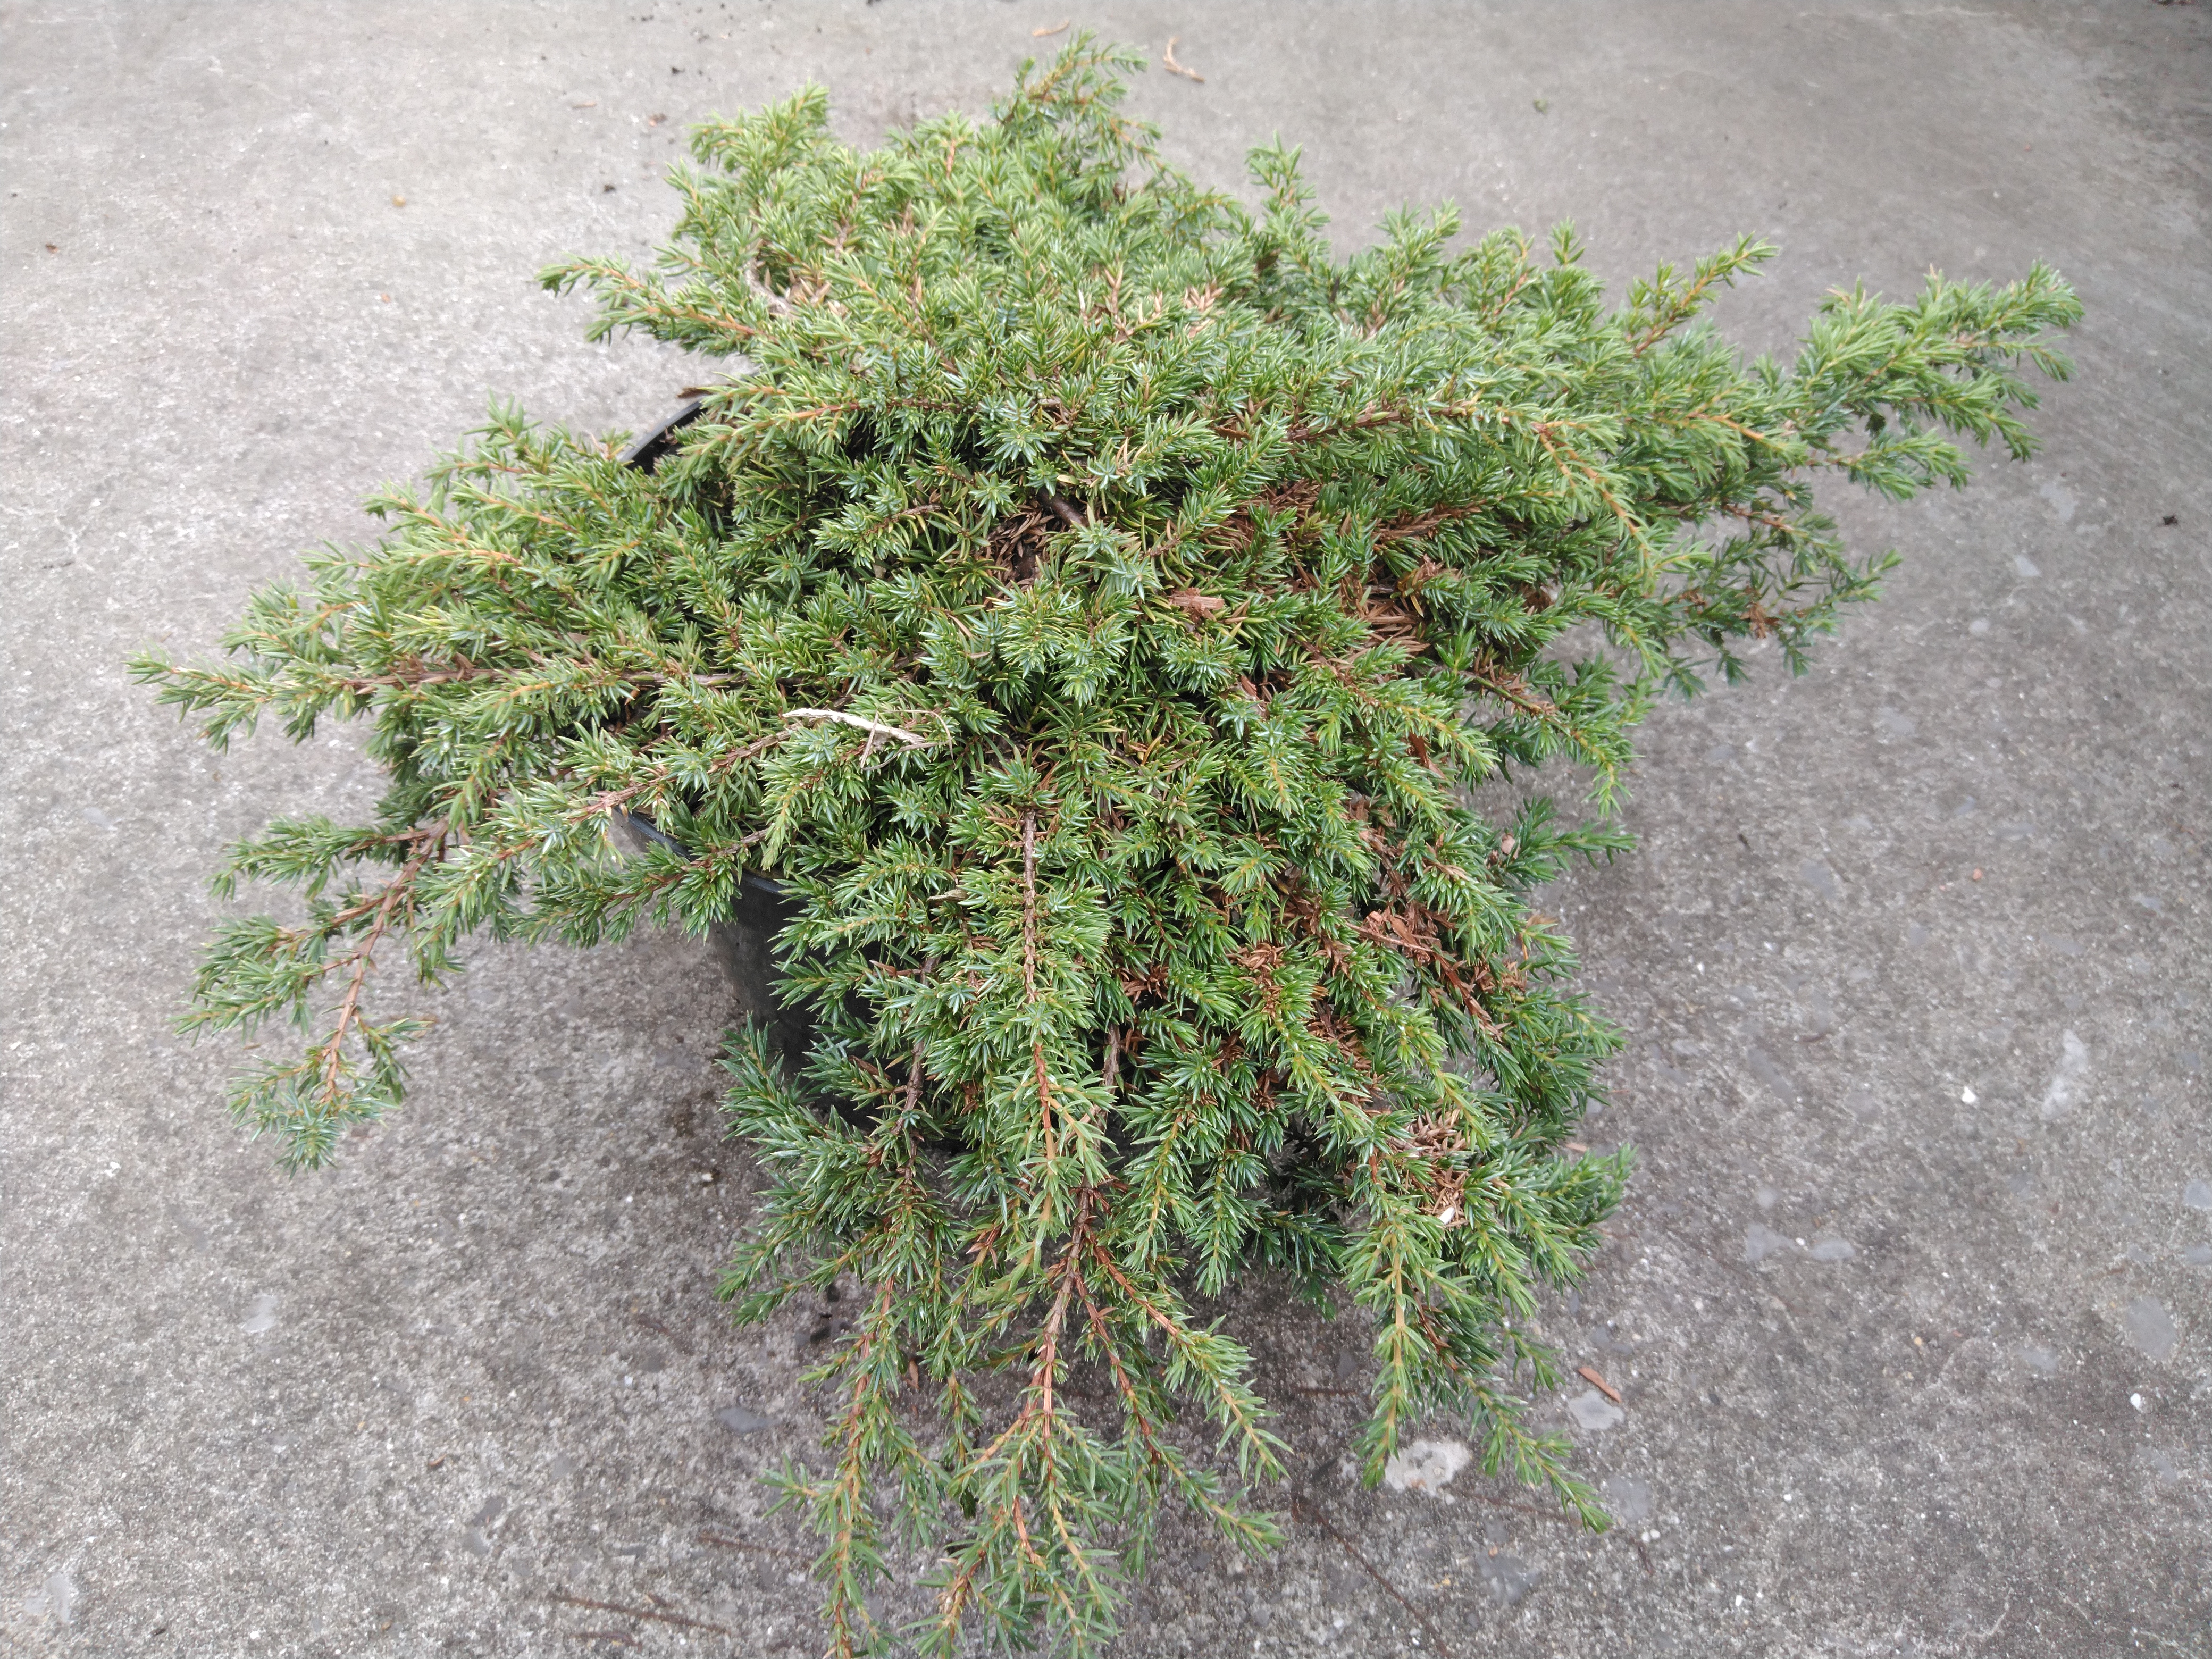 Juniperus comm. 'Lemon Carpet'